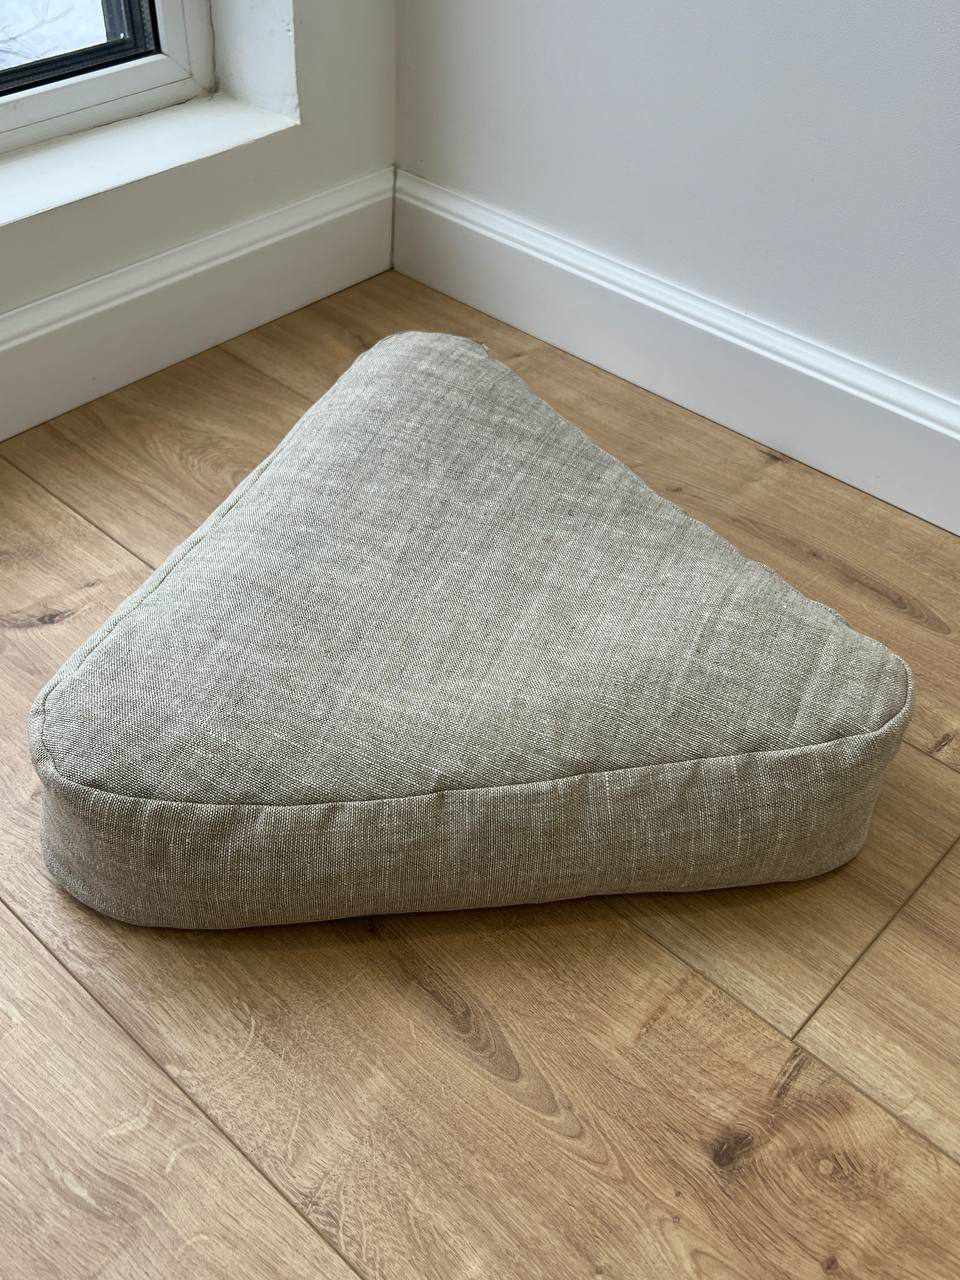 Triangular Linen floor cushion filled Buckwheat hulls /Organic Meditation cushion/ pillow seat/Meditation pillow for Yoga studio